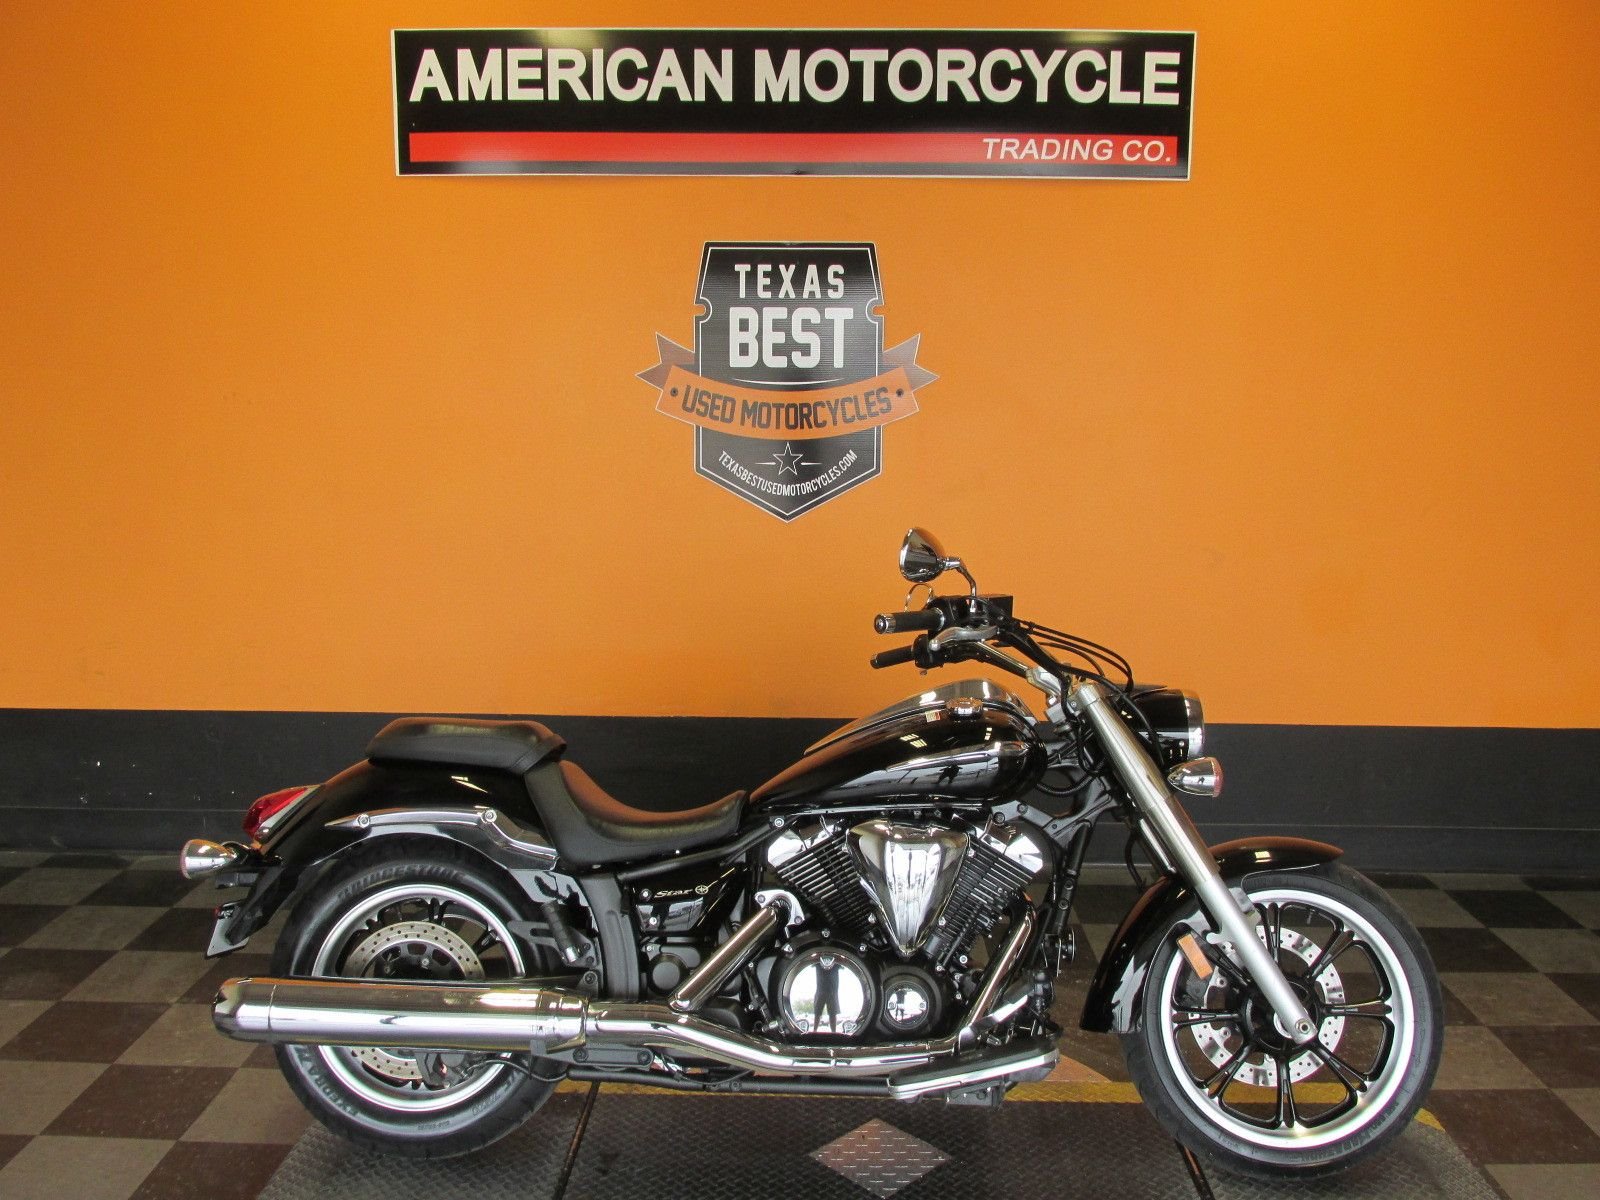 2009 Yamaha V-Star | American Motorcycle Trading Company - Used Harley ...